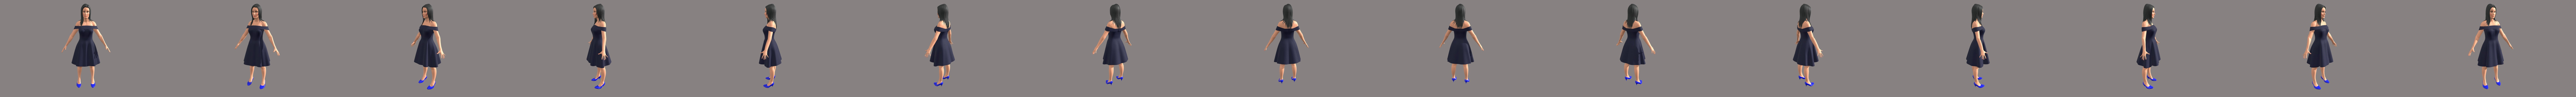 3D model Teni Over Shoulder Long Hair VR / AR / low-poly